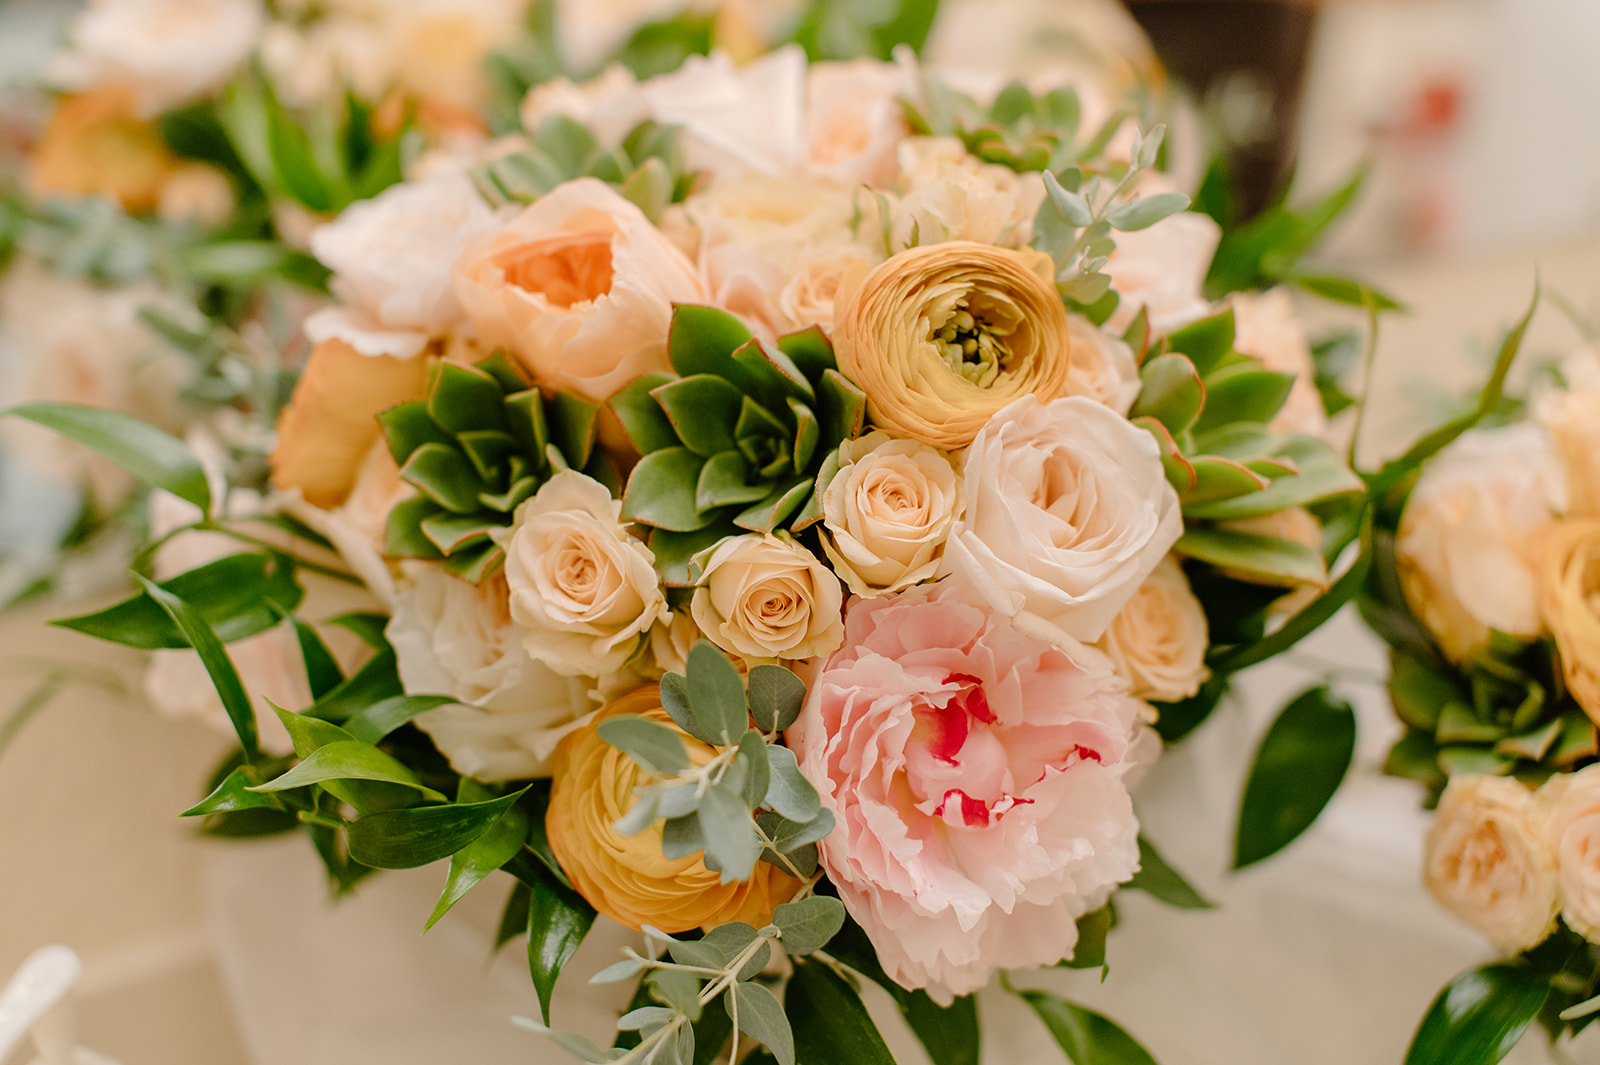 Sydney Jai Photography - Petaluma wedding, wedding flowers, wedding details, bridal bouquet